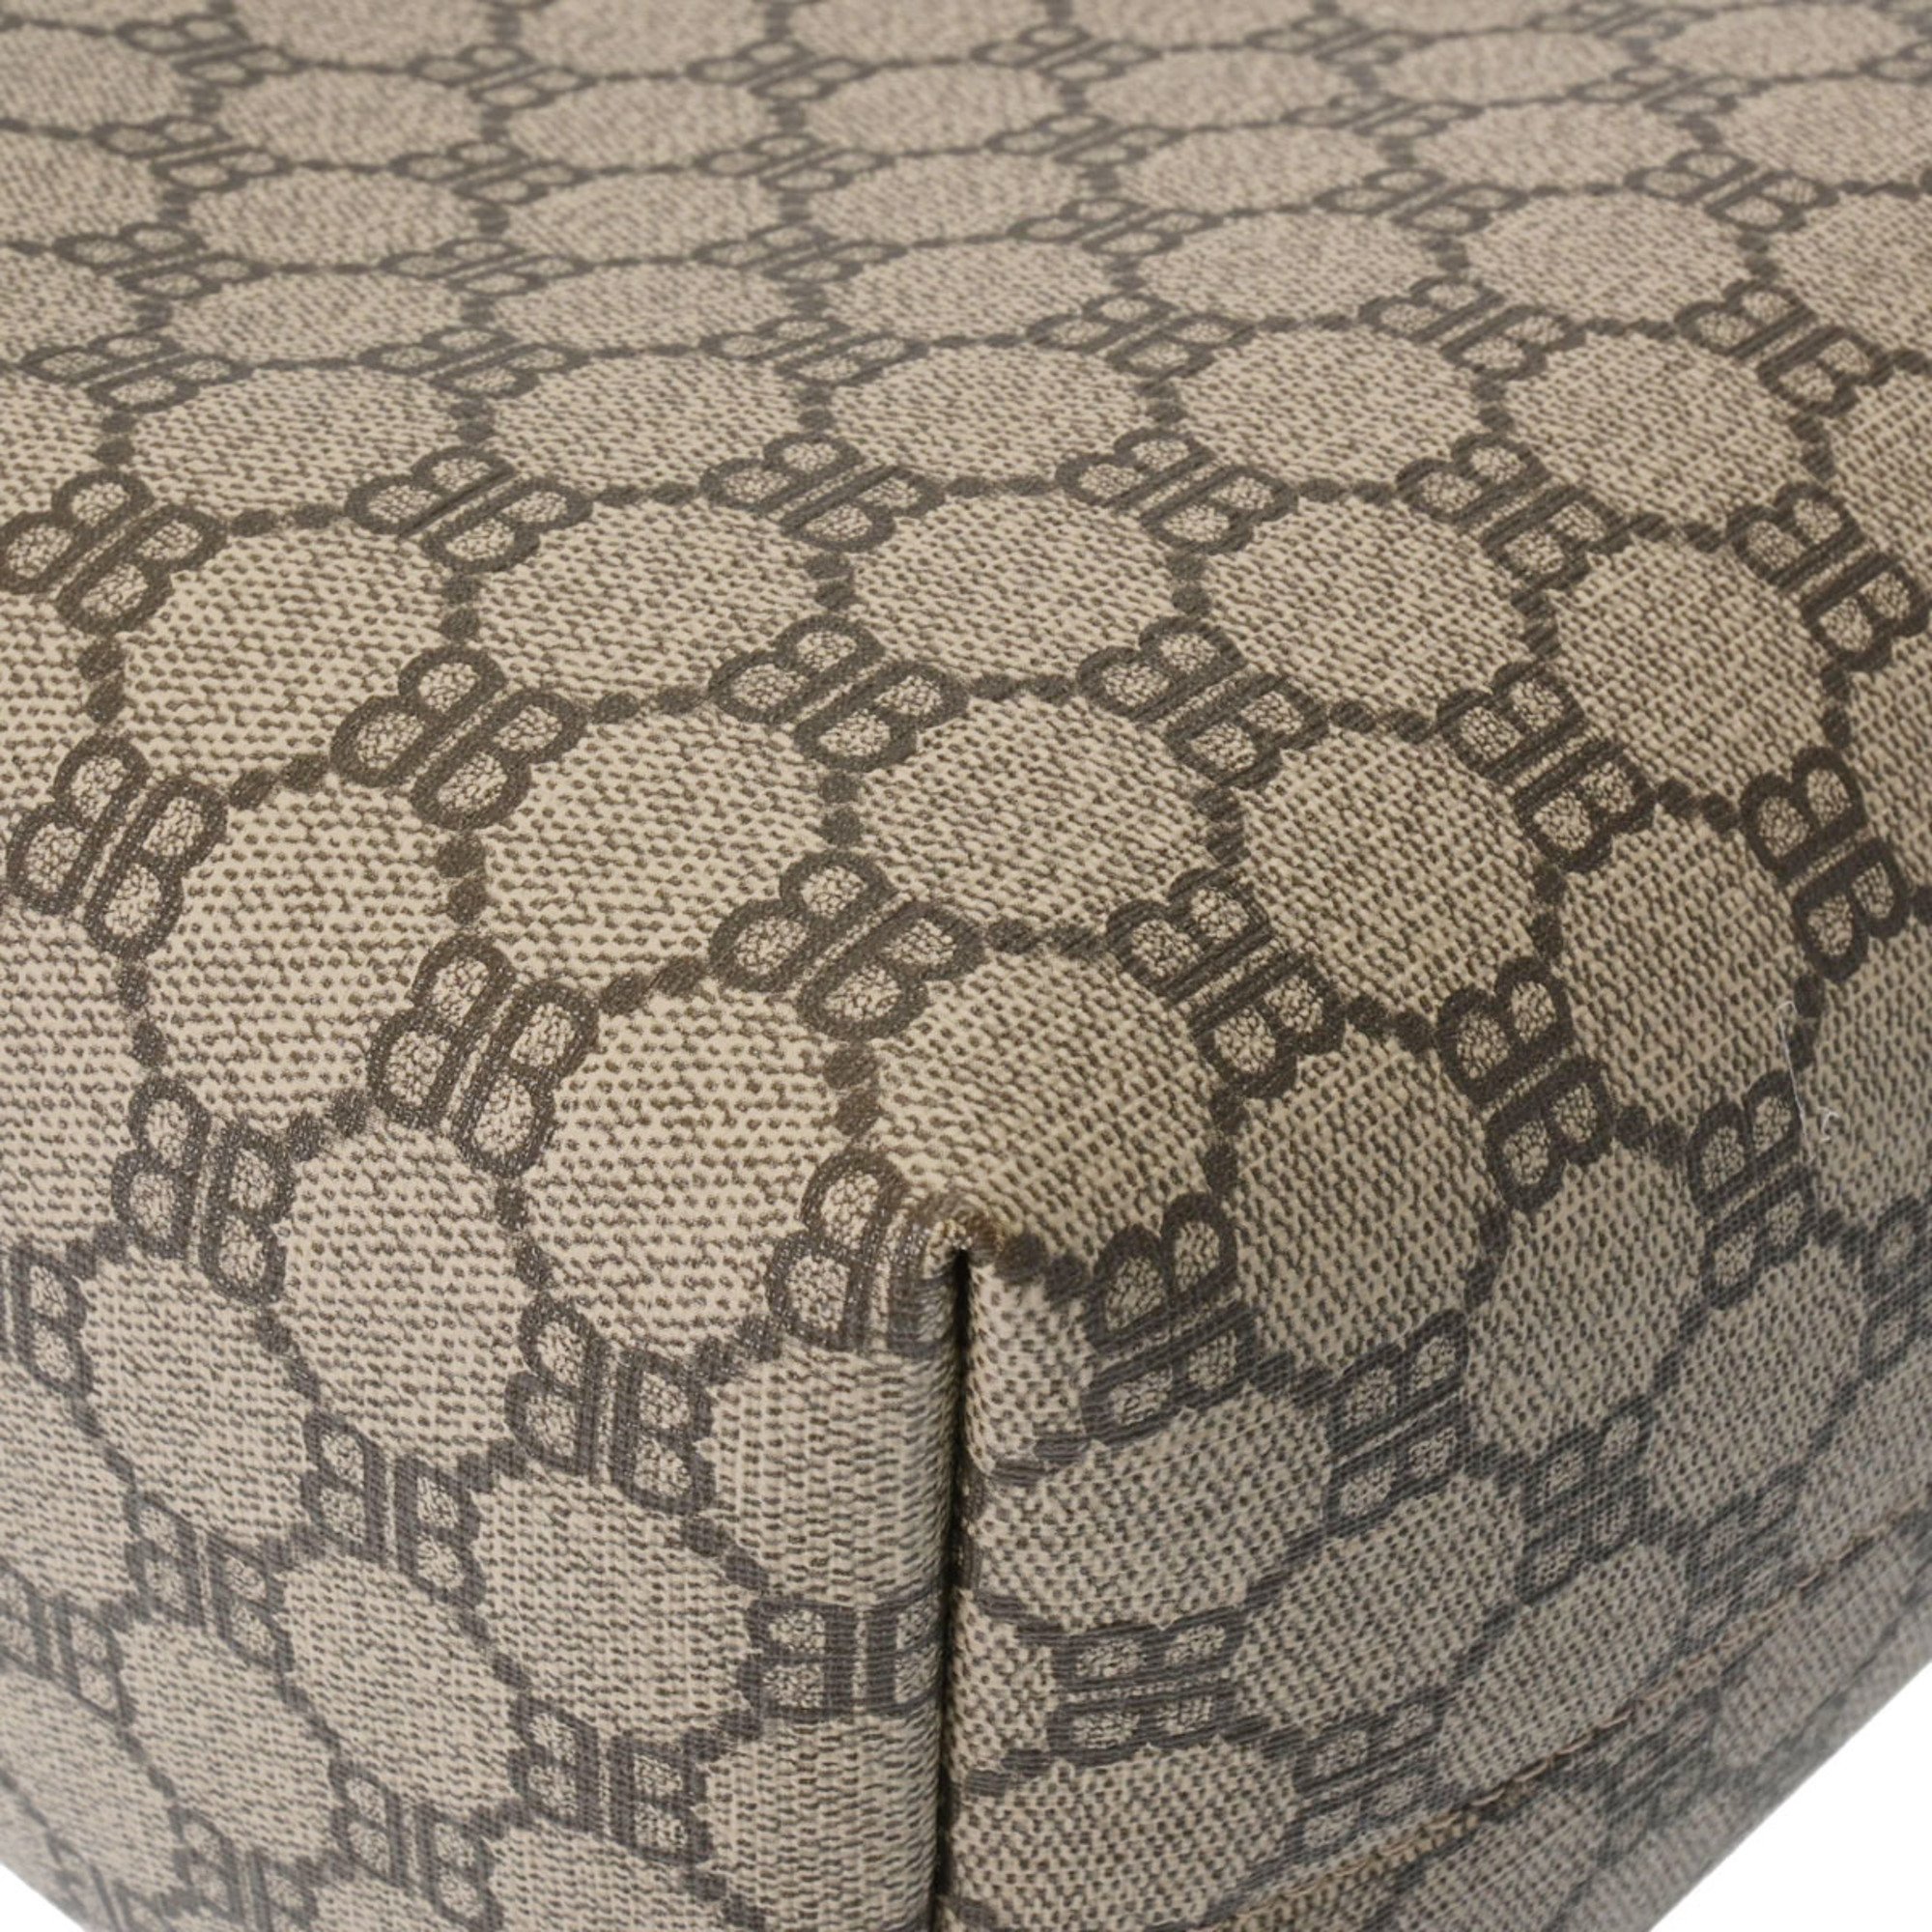 BALENCIAGA Zahacker Medium Tote GUCCI Collaboration Beige 680125 Women's PVC Leather Bag